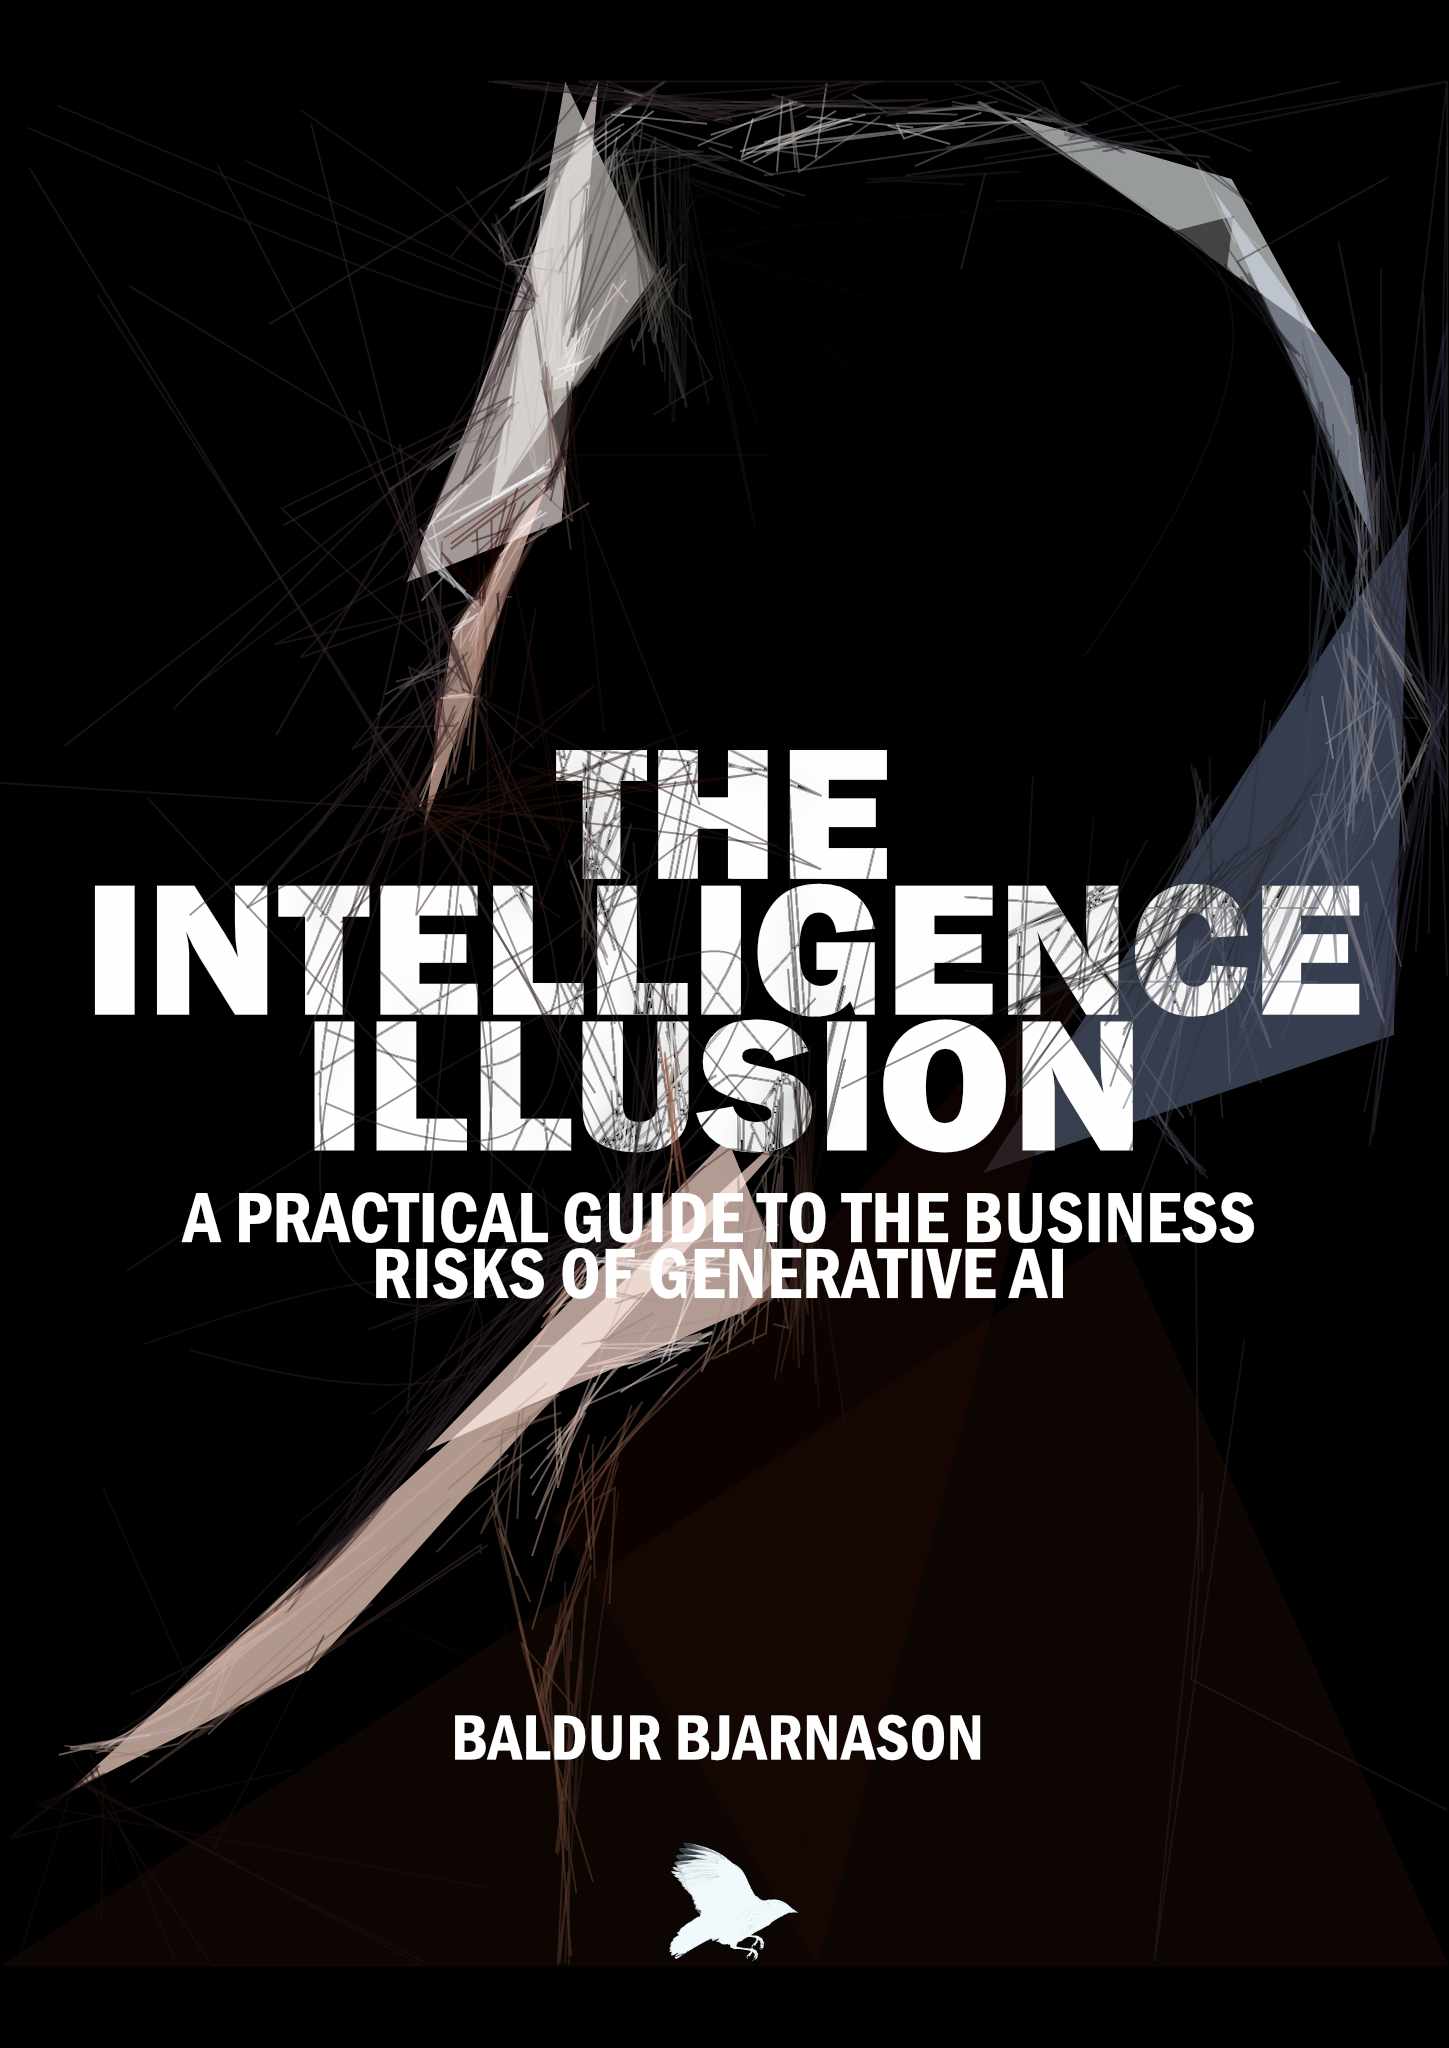 The Intelligence Illusion by Baldur Bjarnason